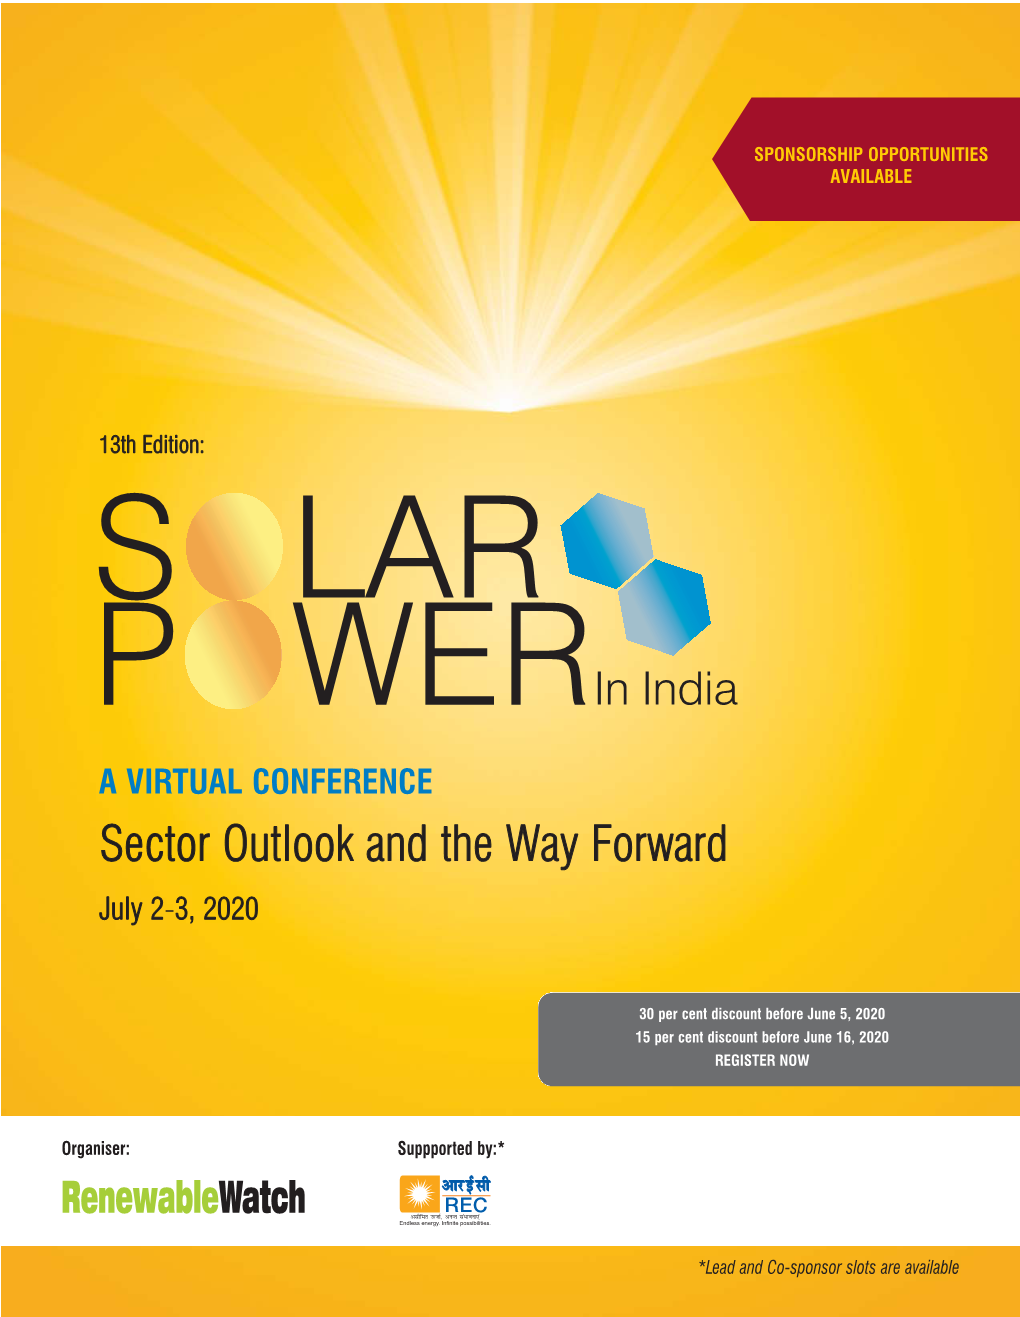 Solar Power in India